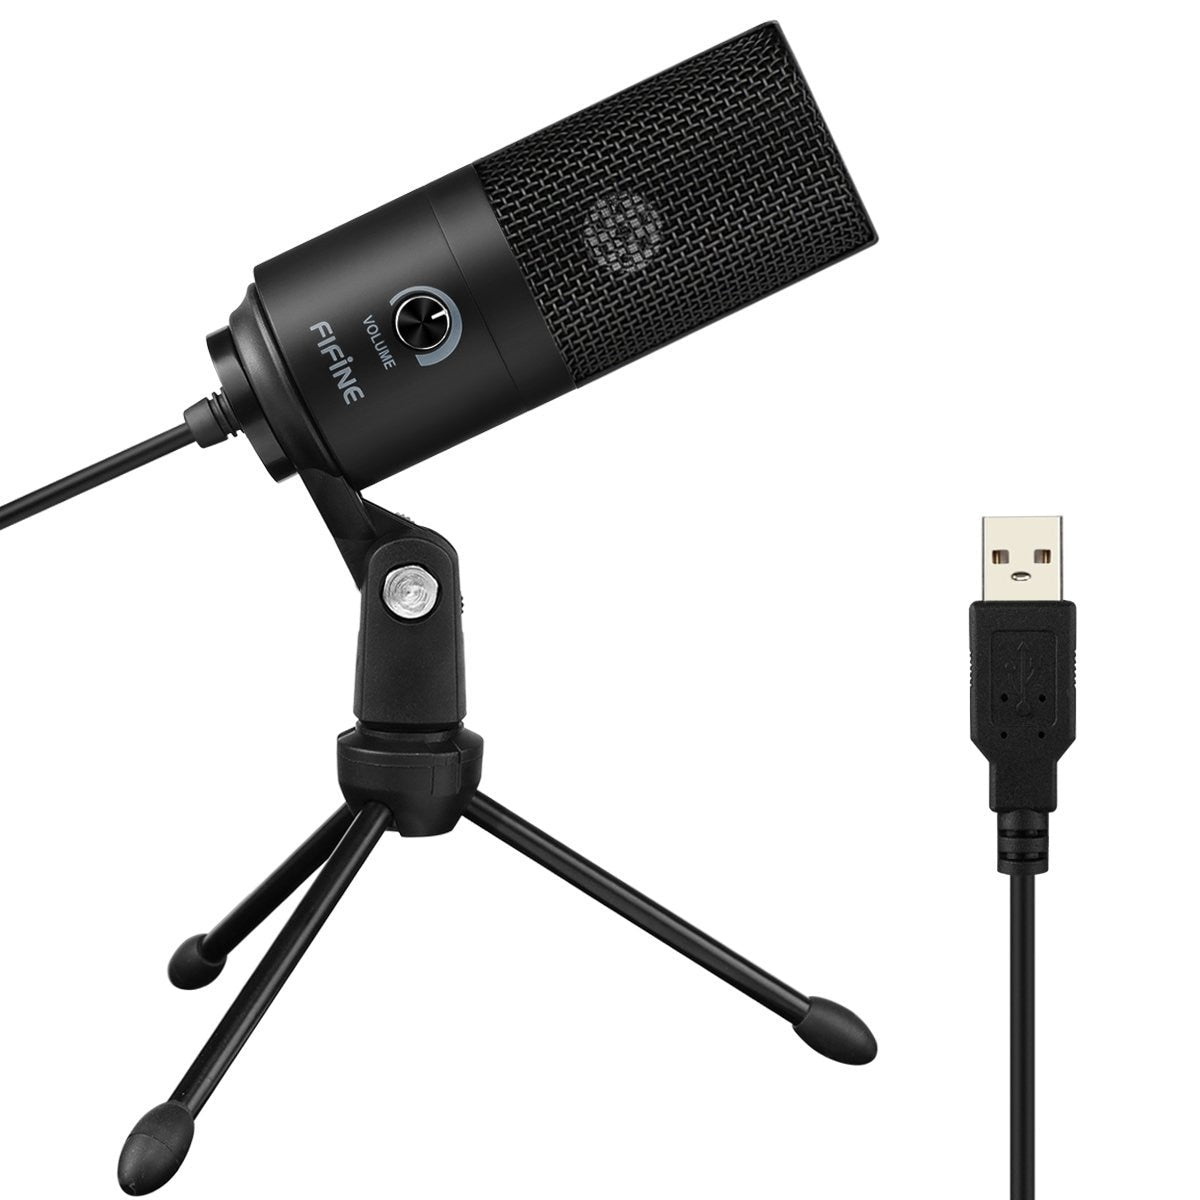 Metal USB Condenser Recording Microphone For Laptop,  Windows Cardioid Studio Recording, Vocals Voice Over